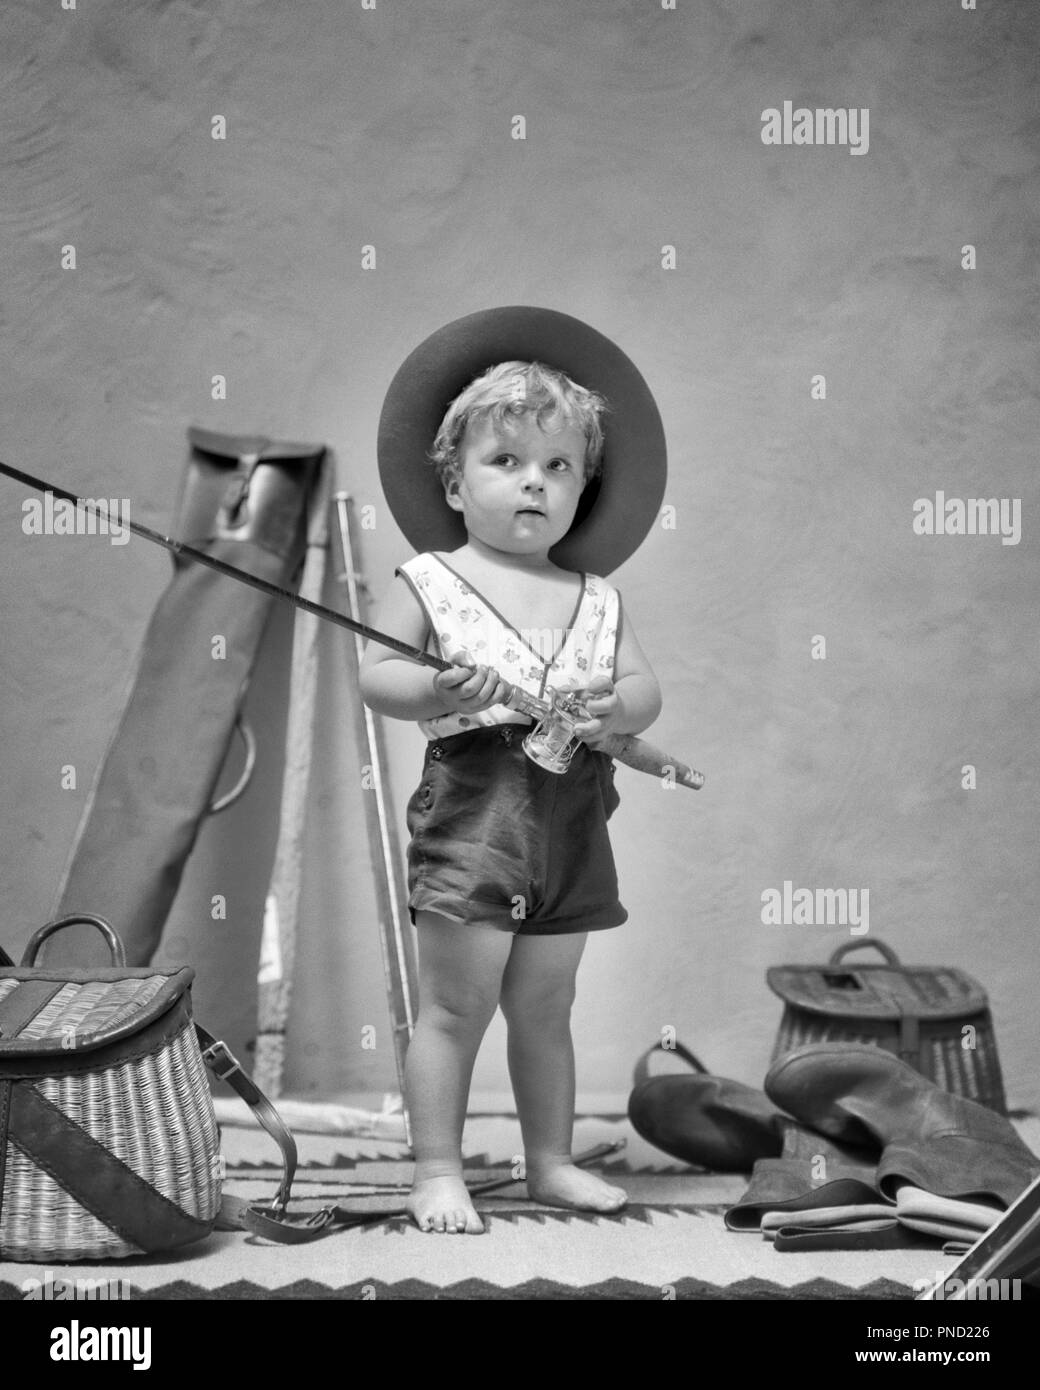 Boy fishing bait Black and White Stock Photos & Images - Alamy